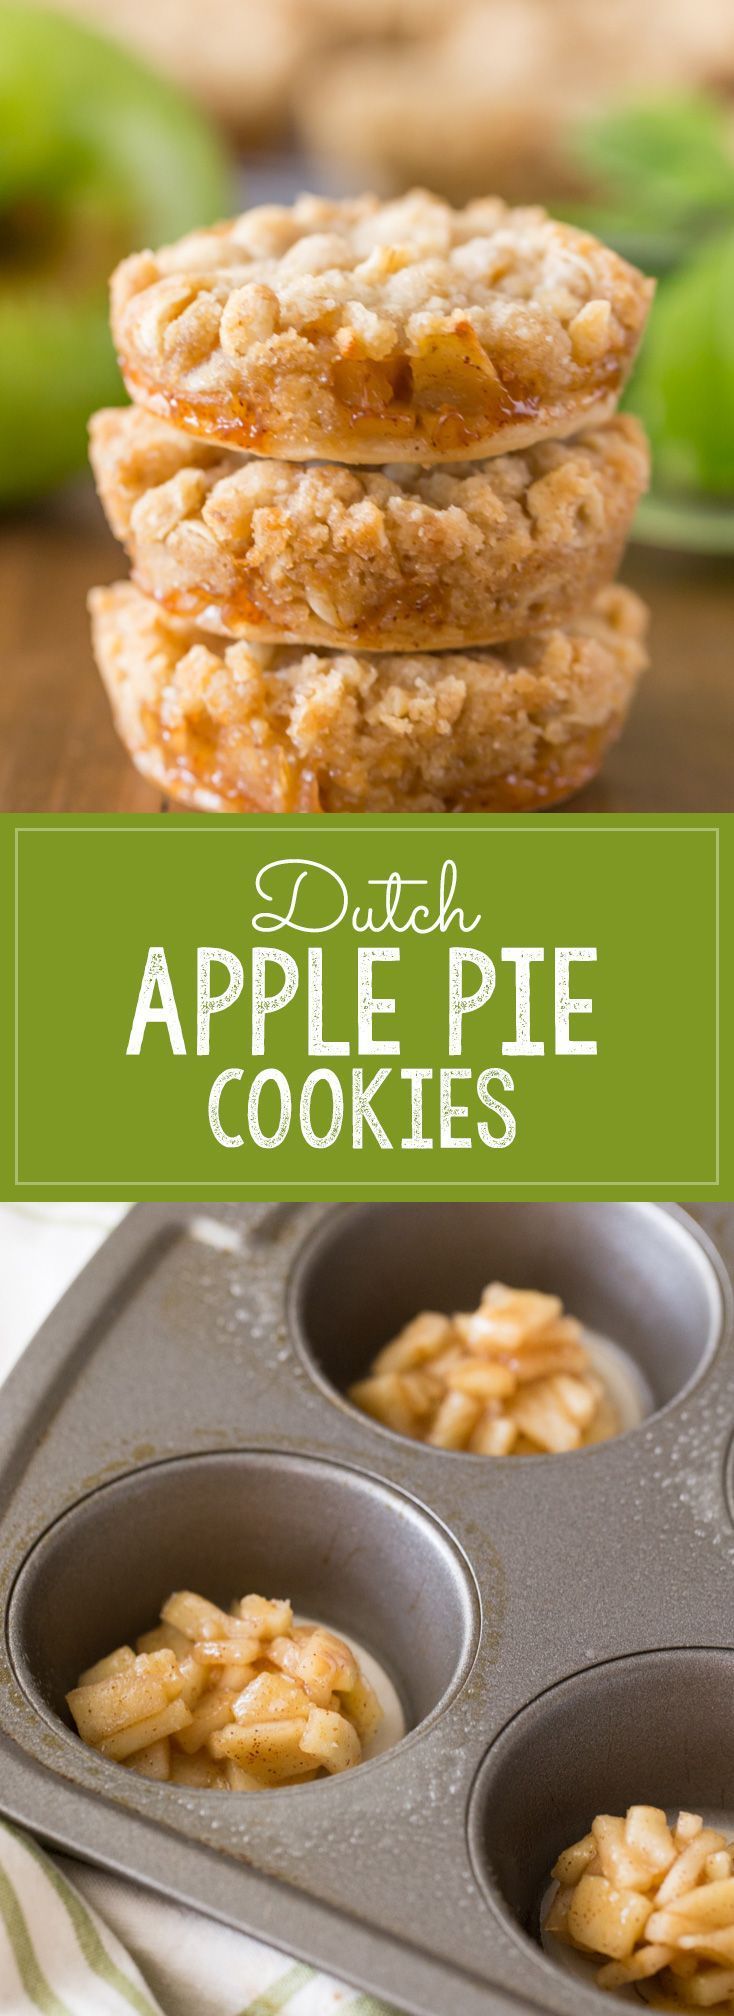 Dutch Apple Pie Cookies – The perfect little three bite dessert with a flakey pie crust, cinnamon appl